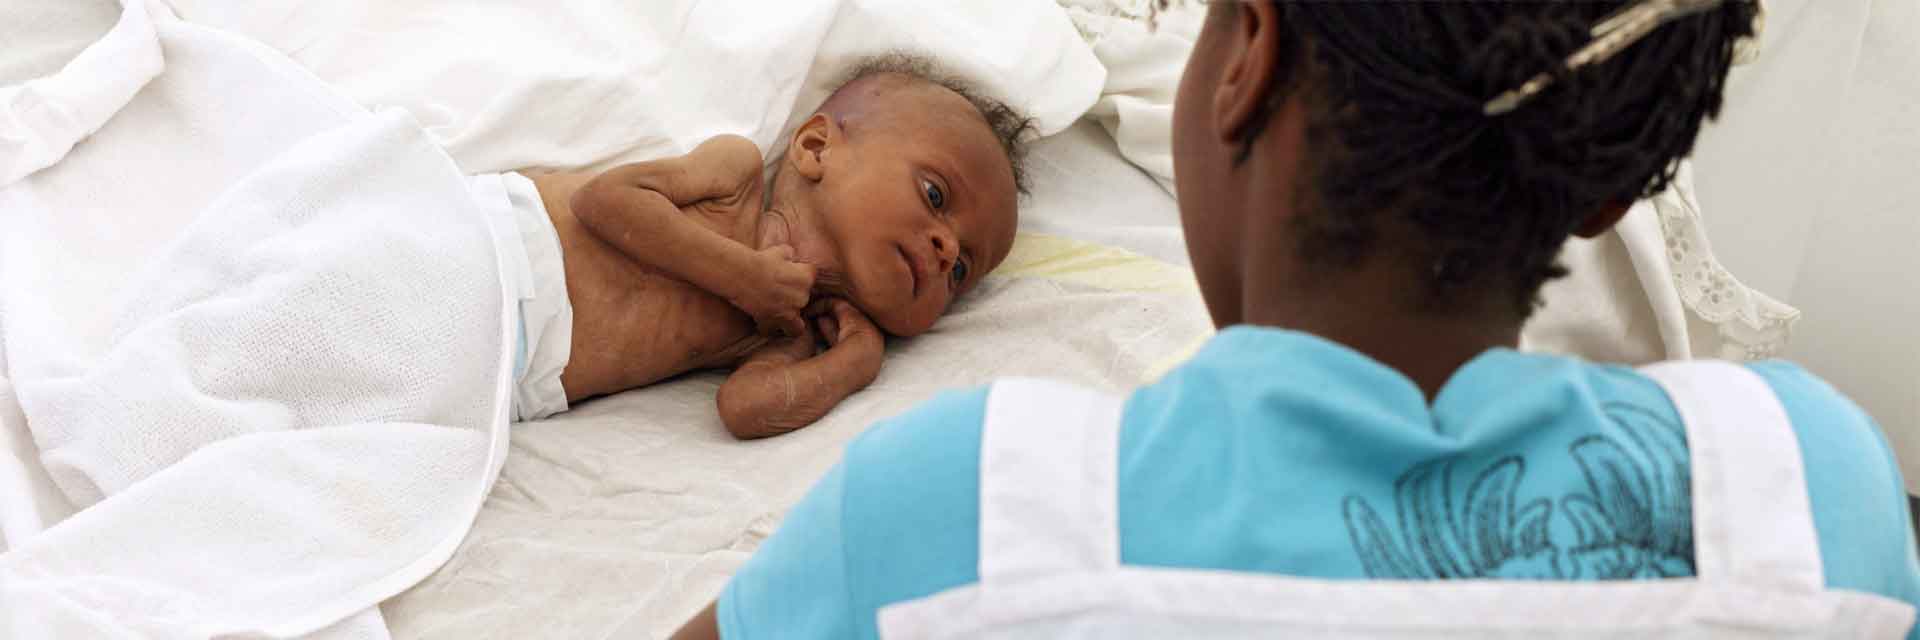 Unterernährung in Burkina Faso